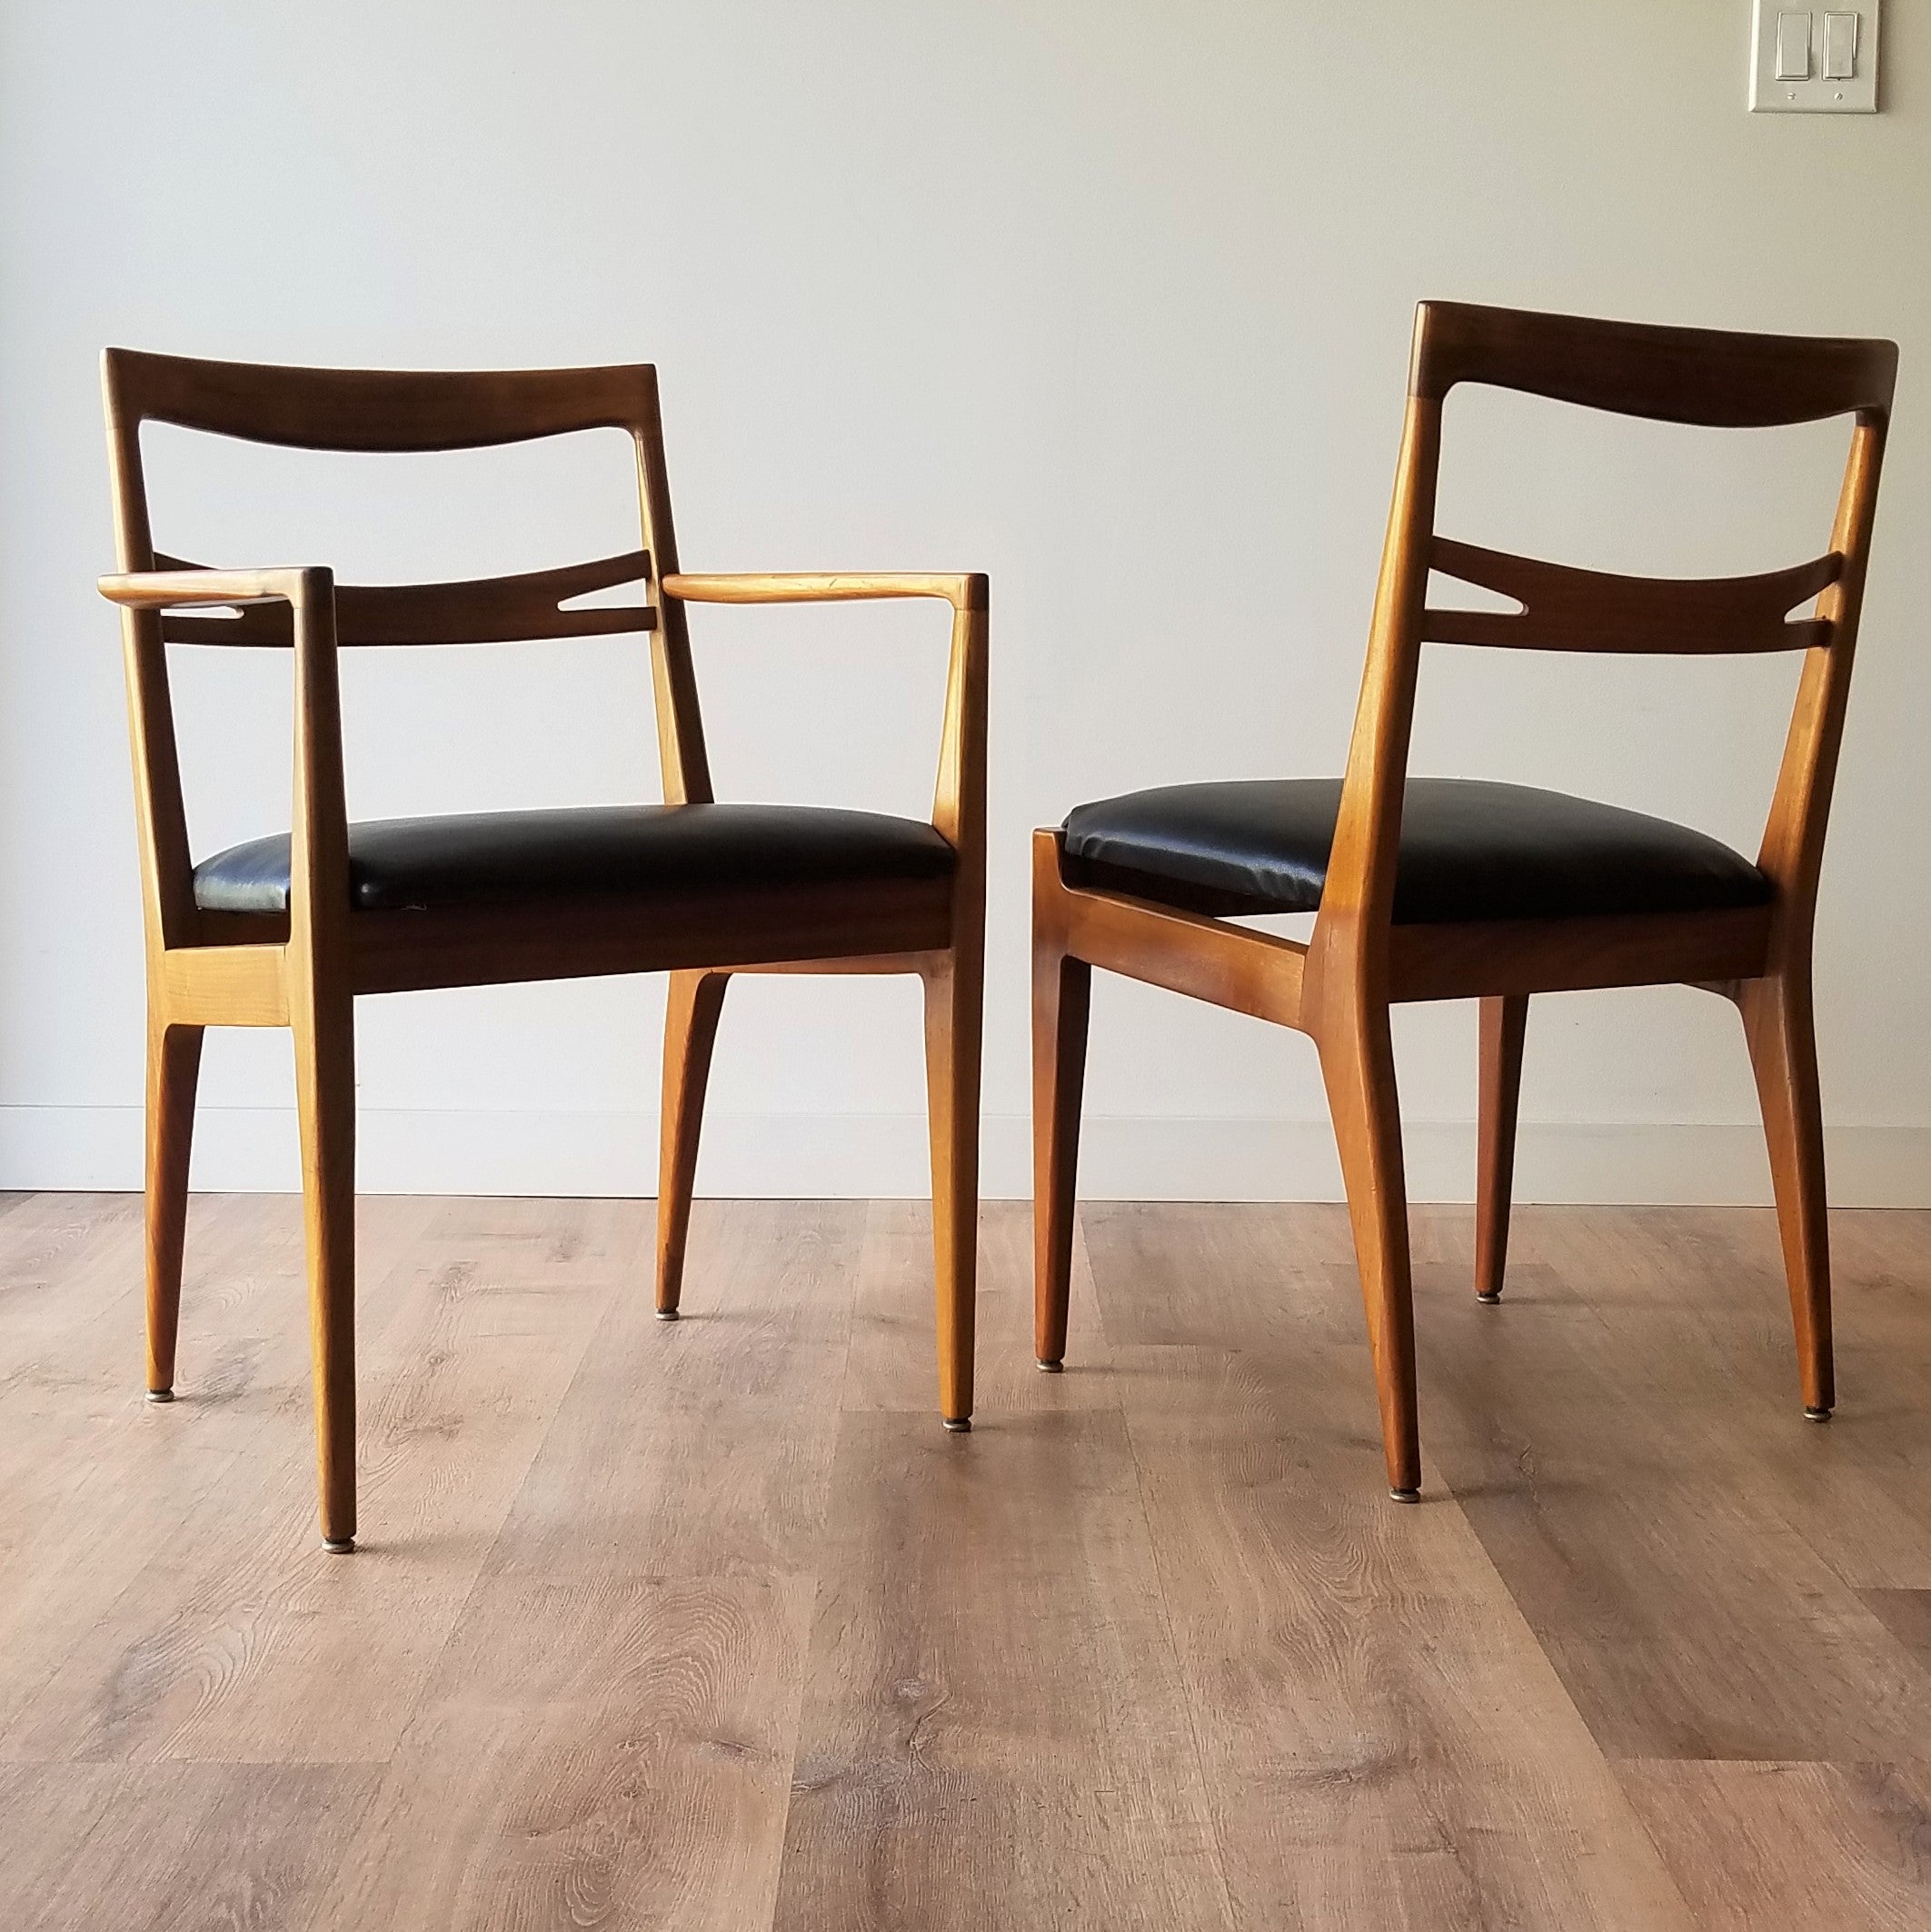 Kipp Stewart Dining Chairs -set of 6